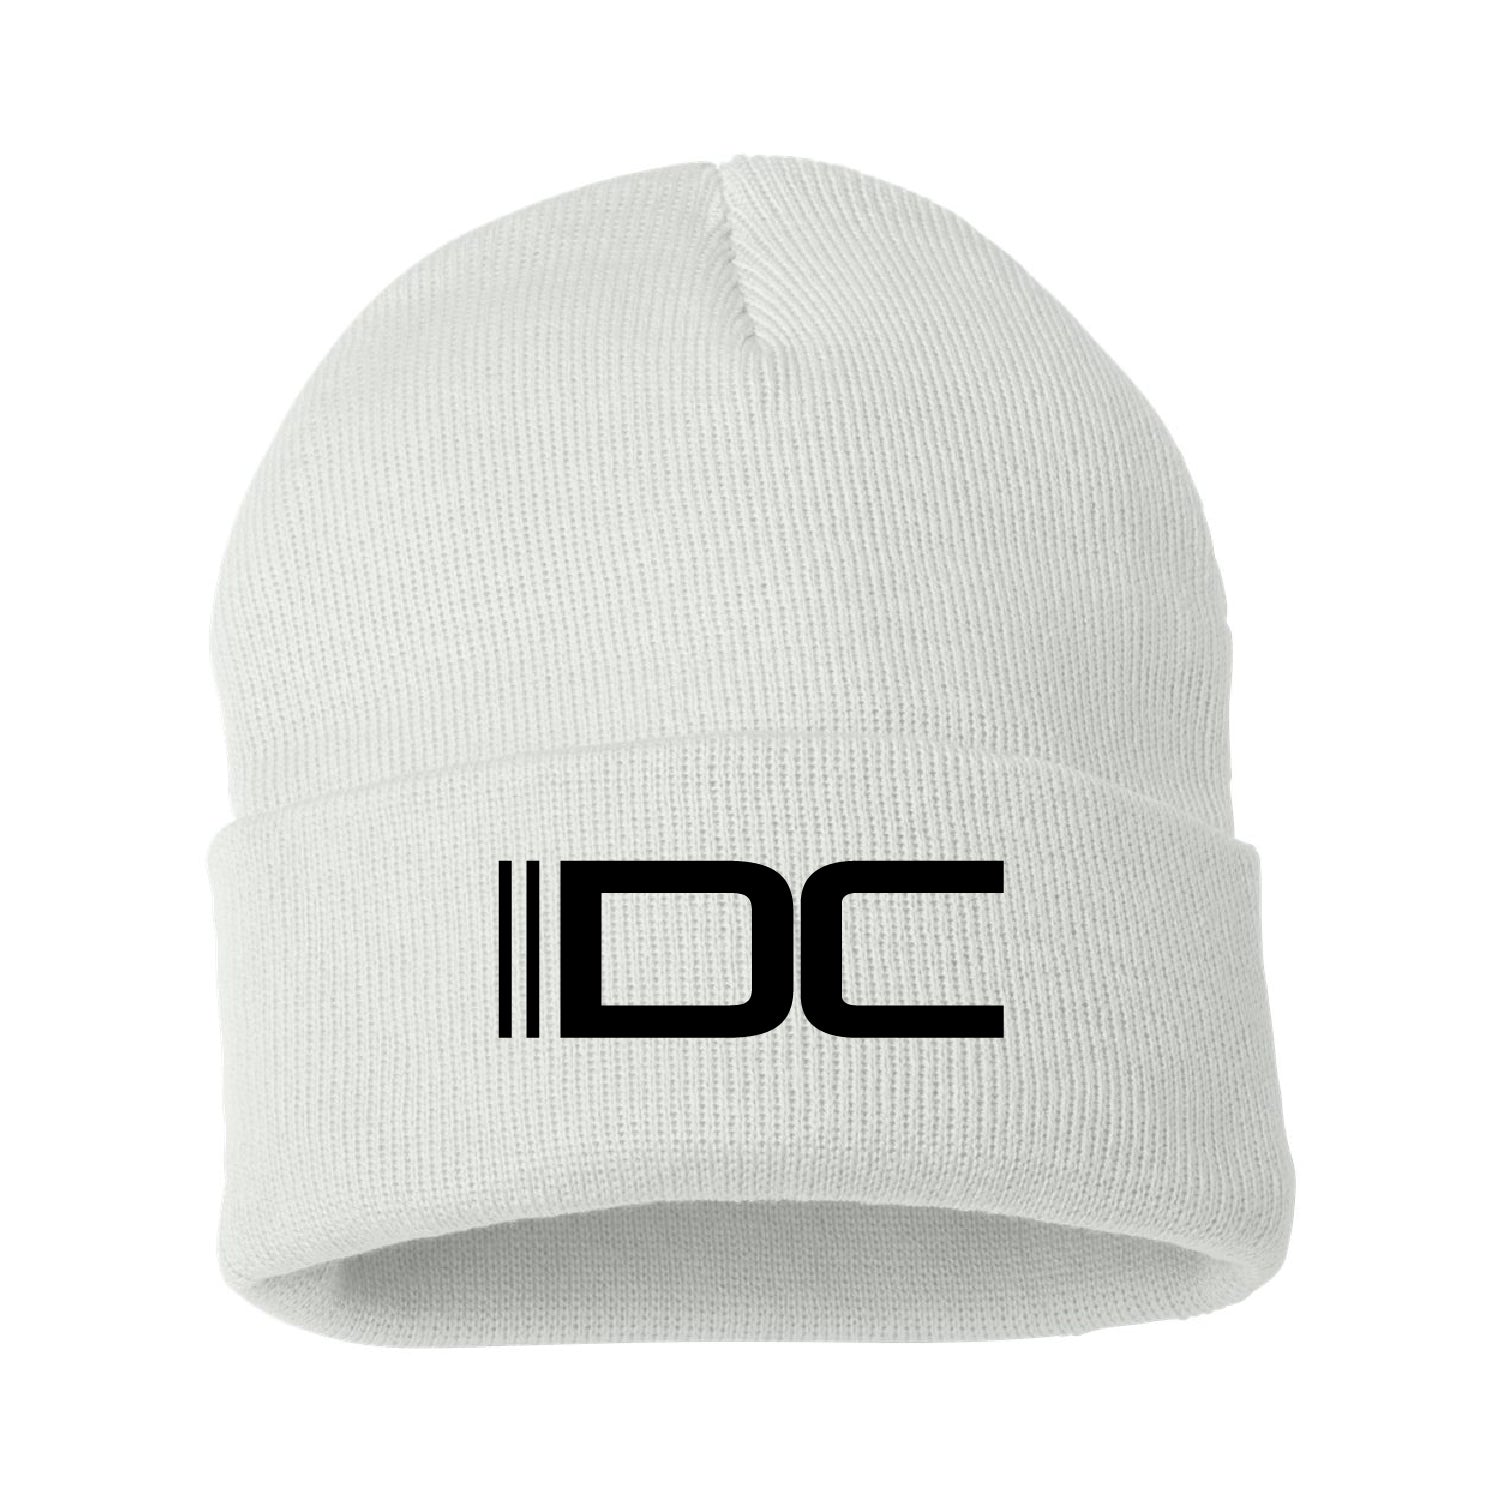 IDC Solid 12